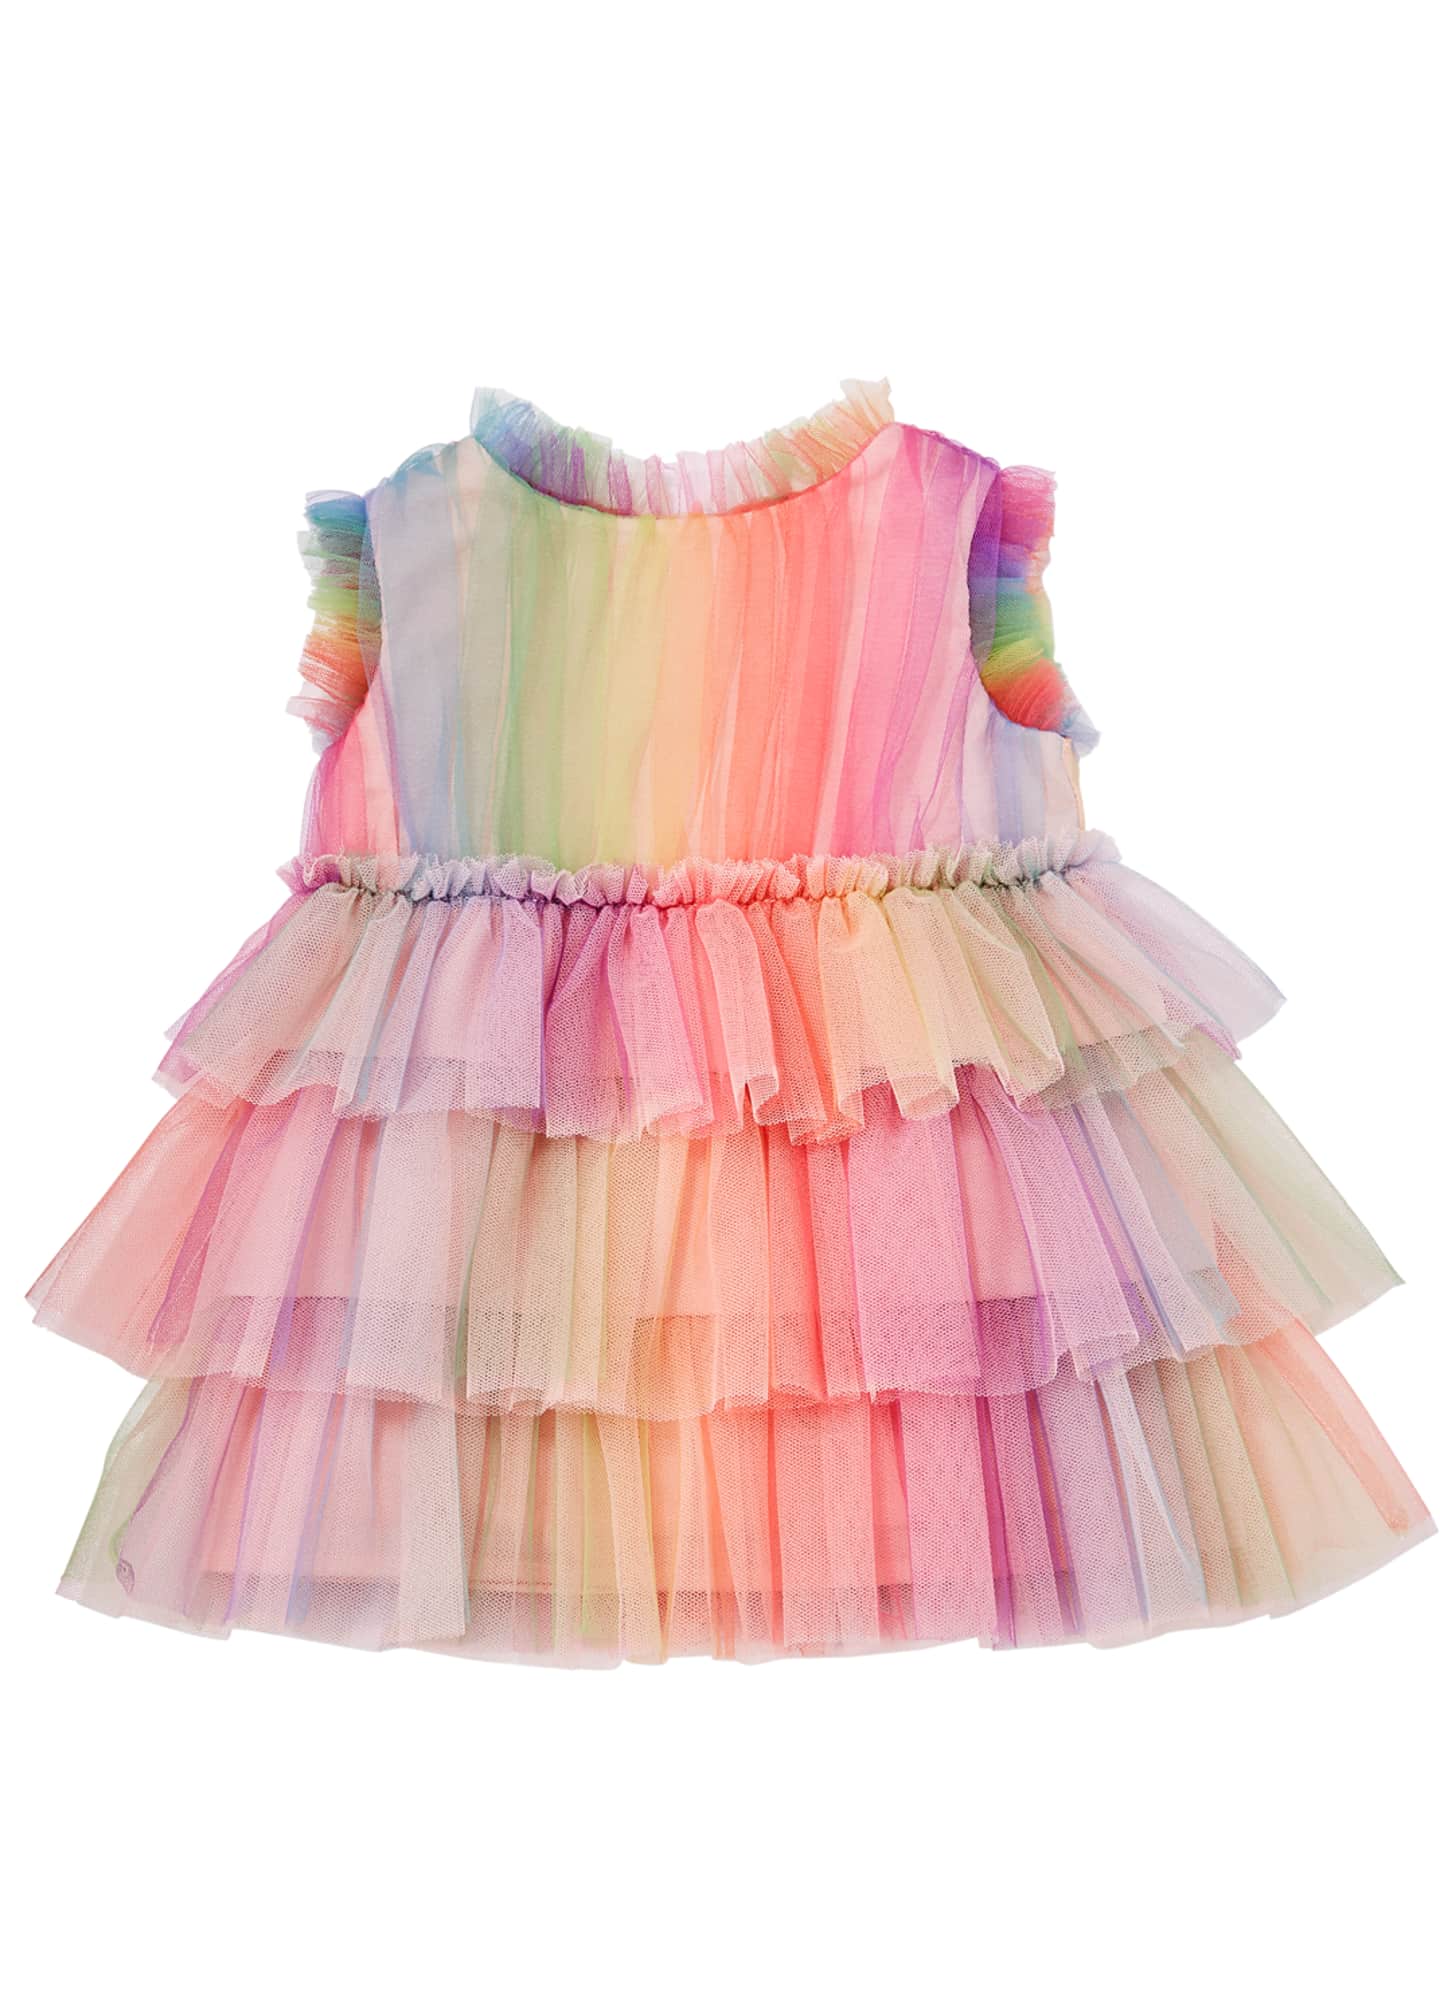 Charabia Rainbow Tulle Ruffle Dress, Size 6-24 Months - Bergdorf Goodman